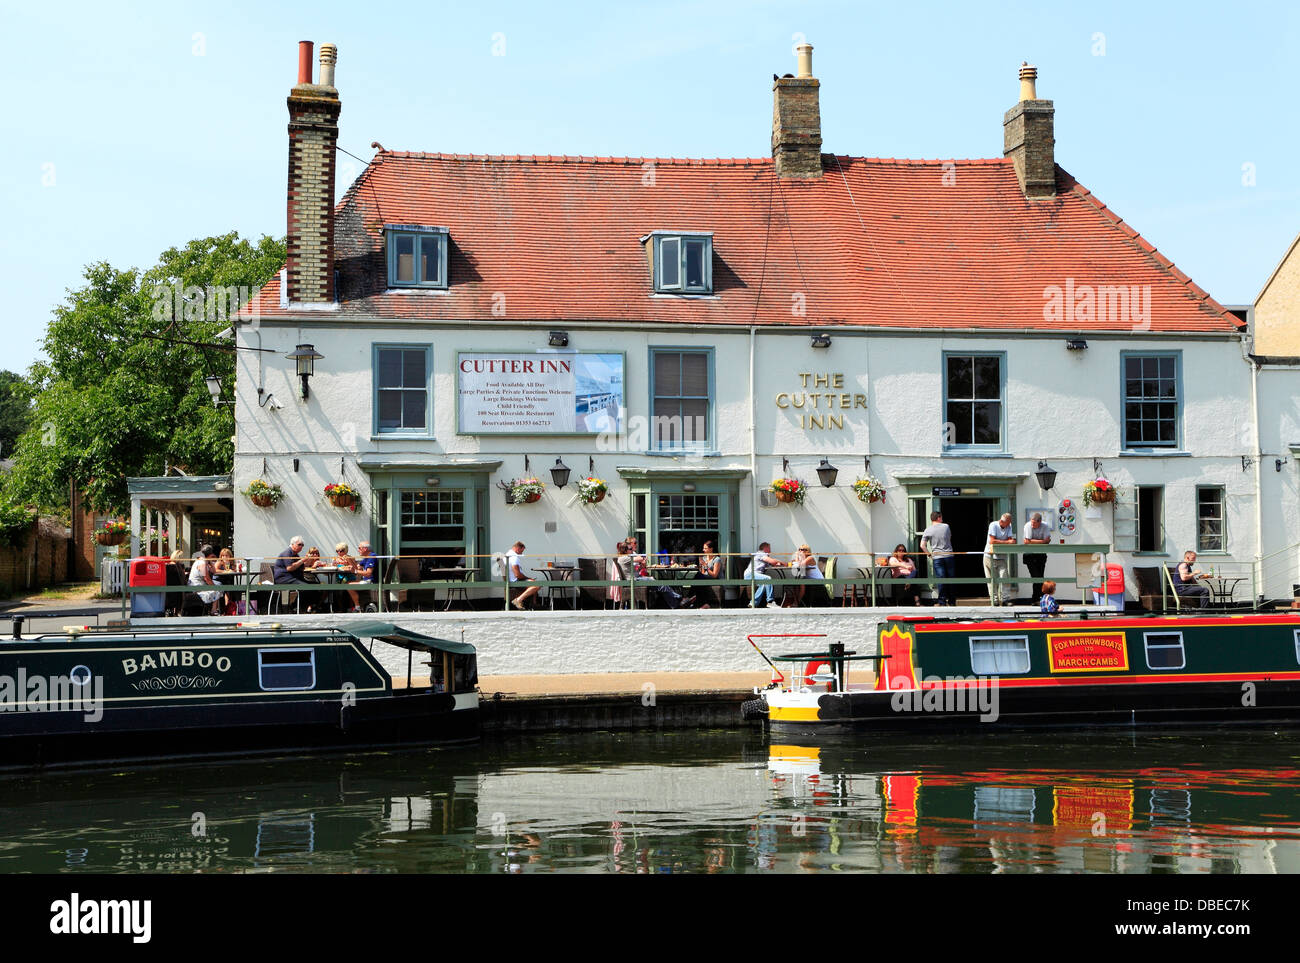 Ely, cortador Inn, el río Ouse, barcos, barcazas, Cambridgeshire Inglaterra Inglés ríos Inn pub pubs Foto de stock